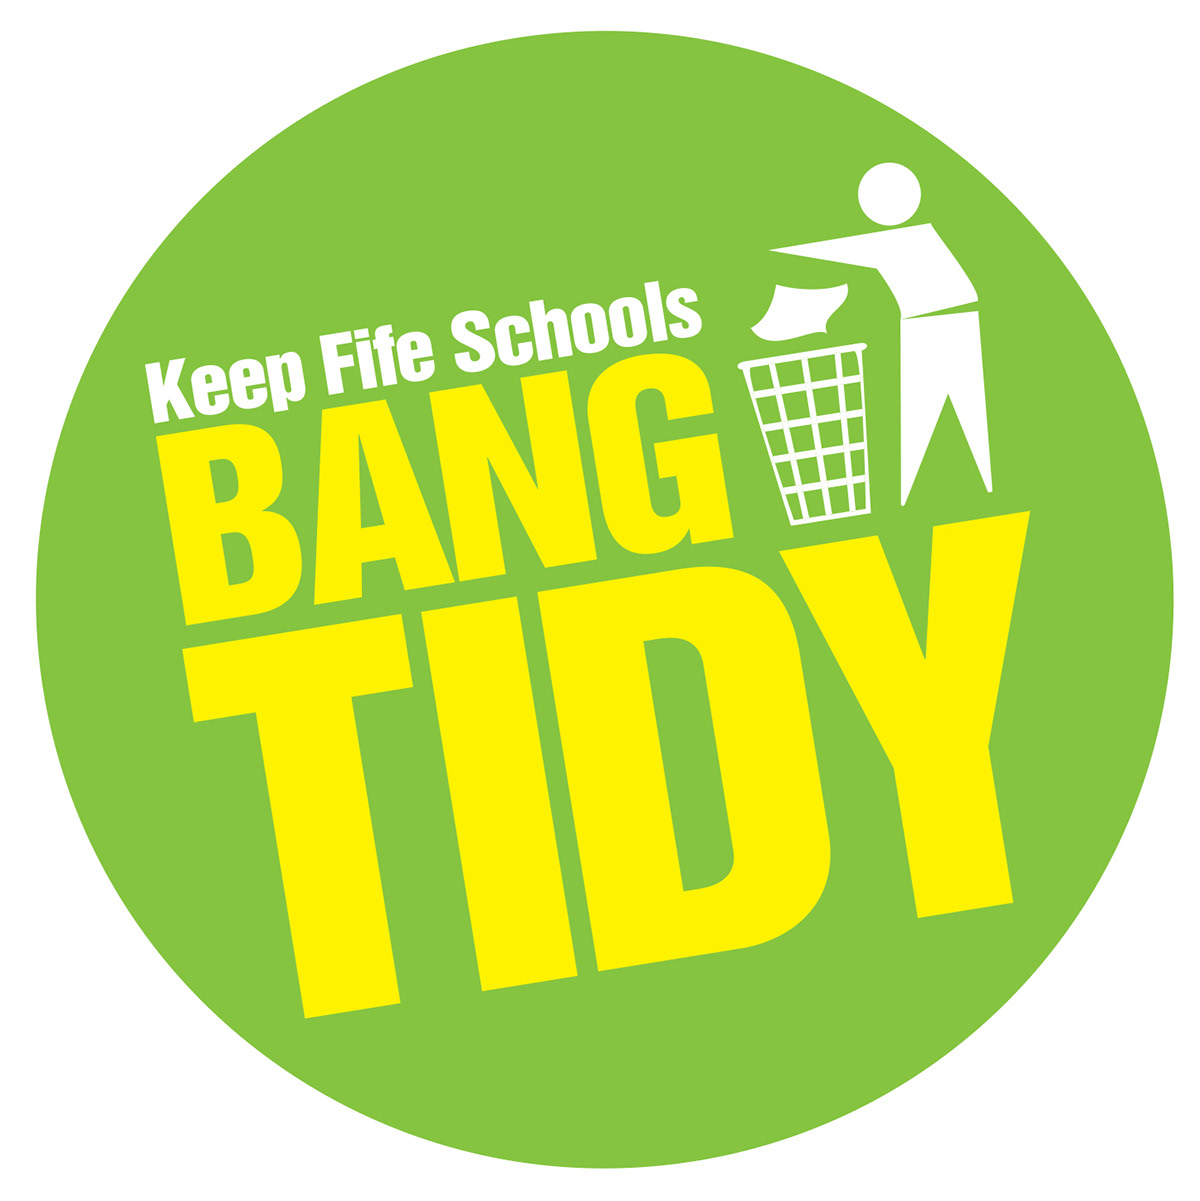 Bang Tidy Keith Lemon celebrity juice recycling Schools Litter